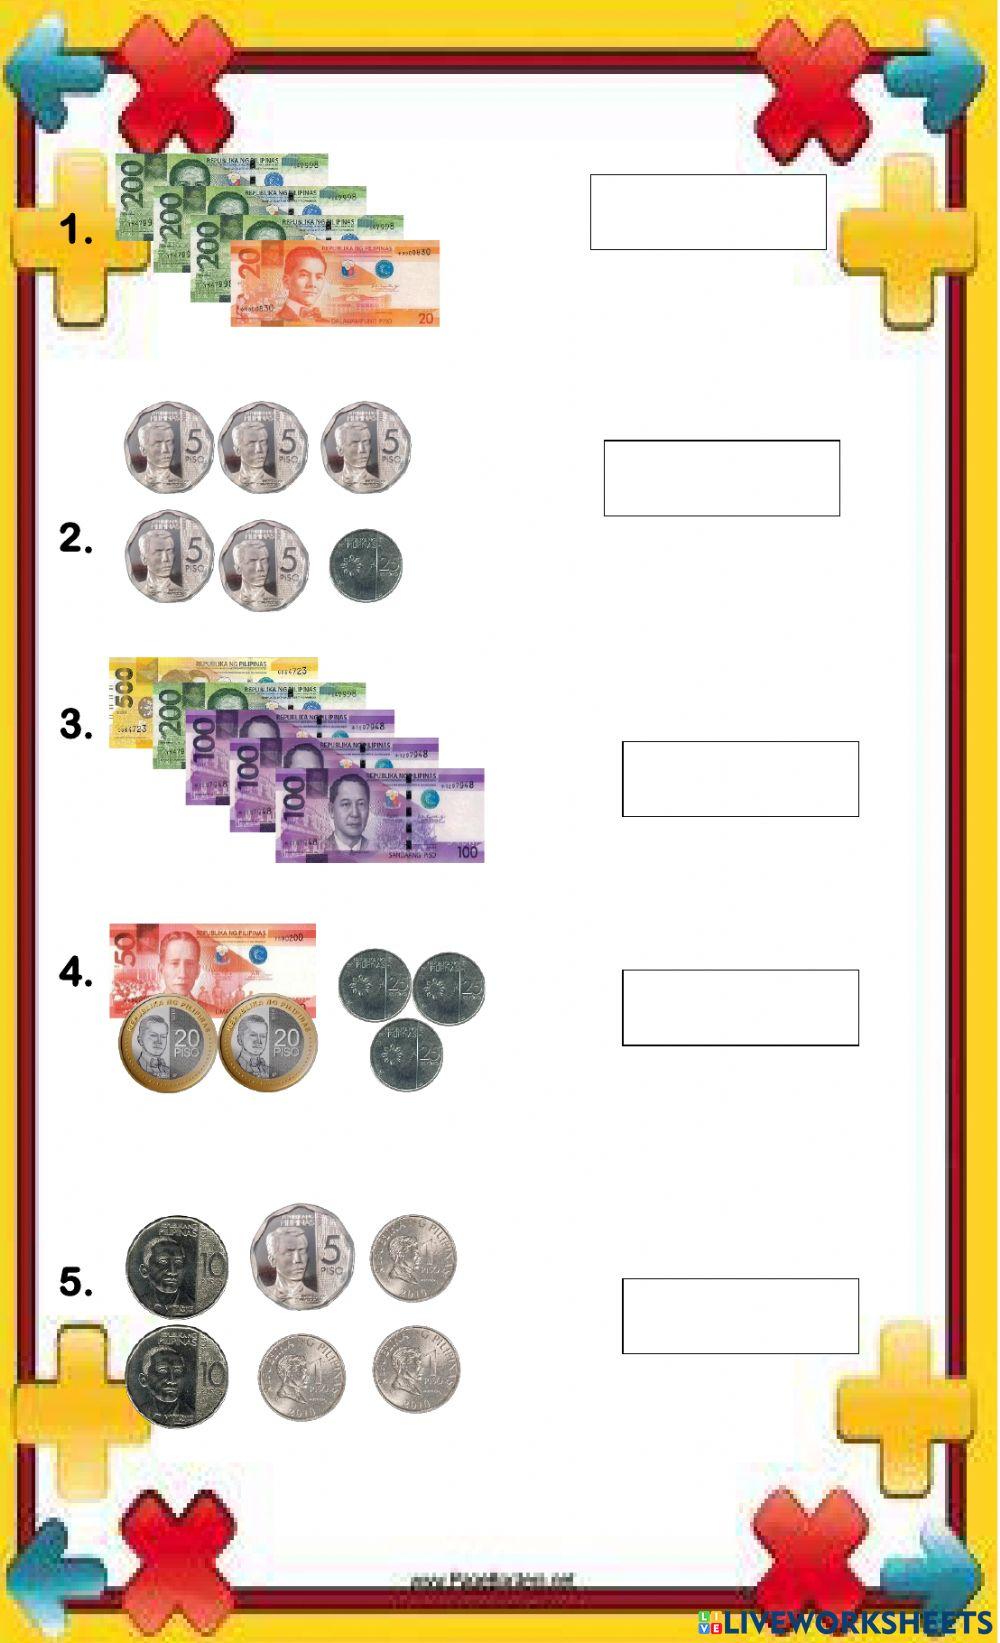 Philippine money (bills and notes)